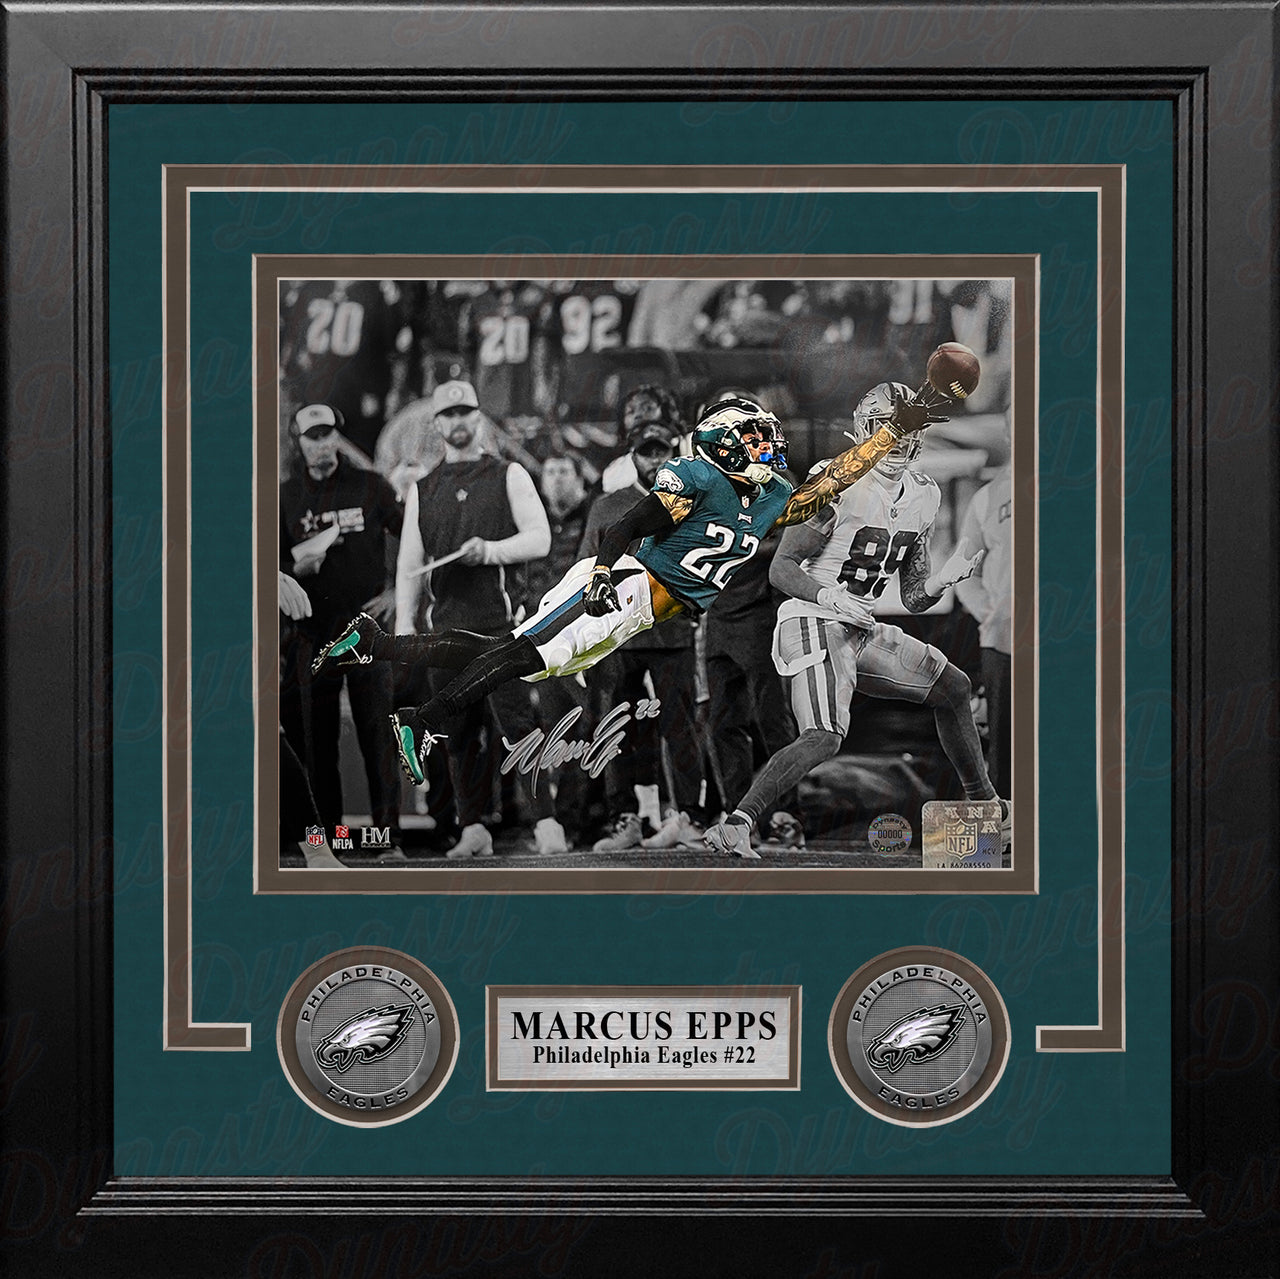 Marcus Epps Philadelphia Eagles Autographed Spotlight Framed Football Photo - Dynasty Sports & Framing 